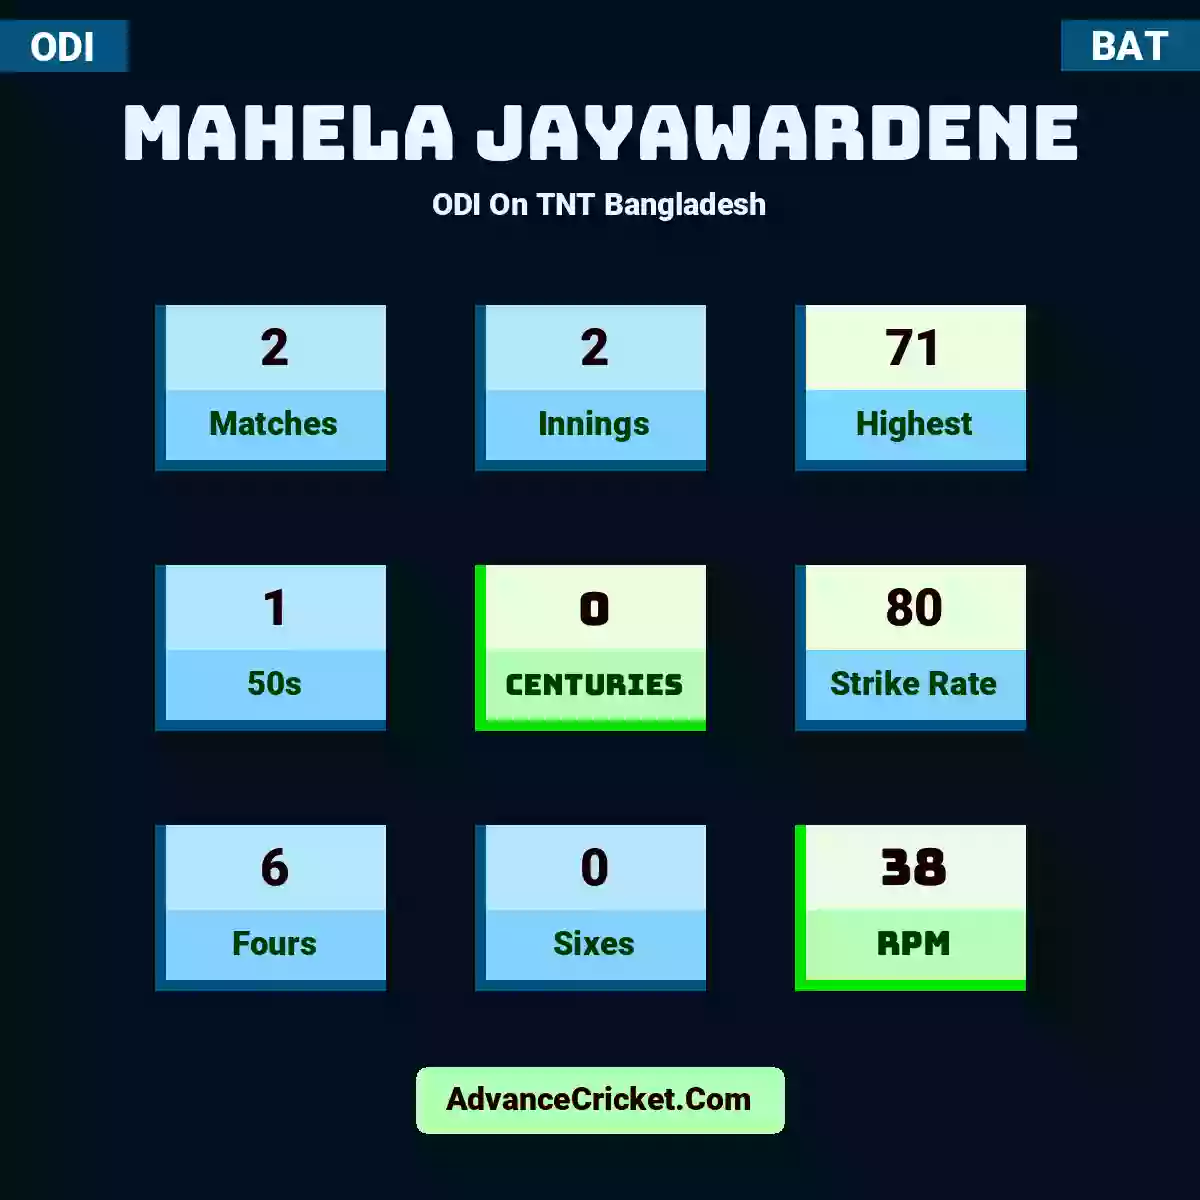 Mahela Jayawardene ODI  On TNT Bangladesh, Mahela Jayawardene played 2 matches, scored 71 runs as highest, 1 half-centuries, and 0 centuries, with a strike rate of 80. M.Jayawardene hit 6 fours and 0 sixes, with an RPM of 38.